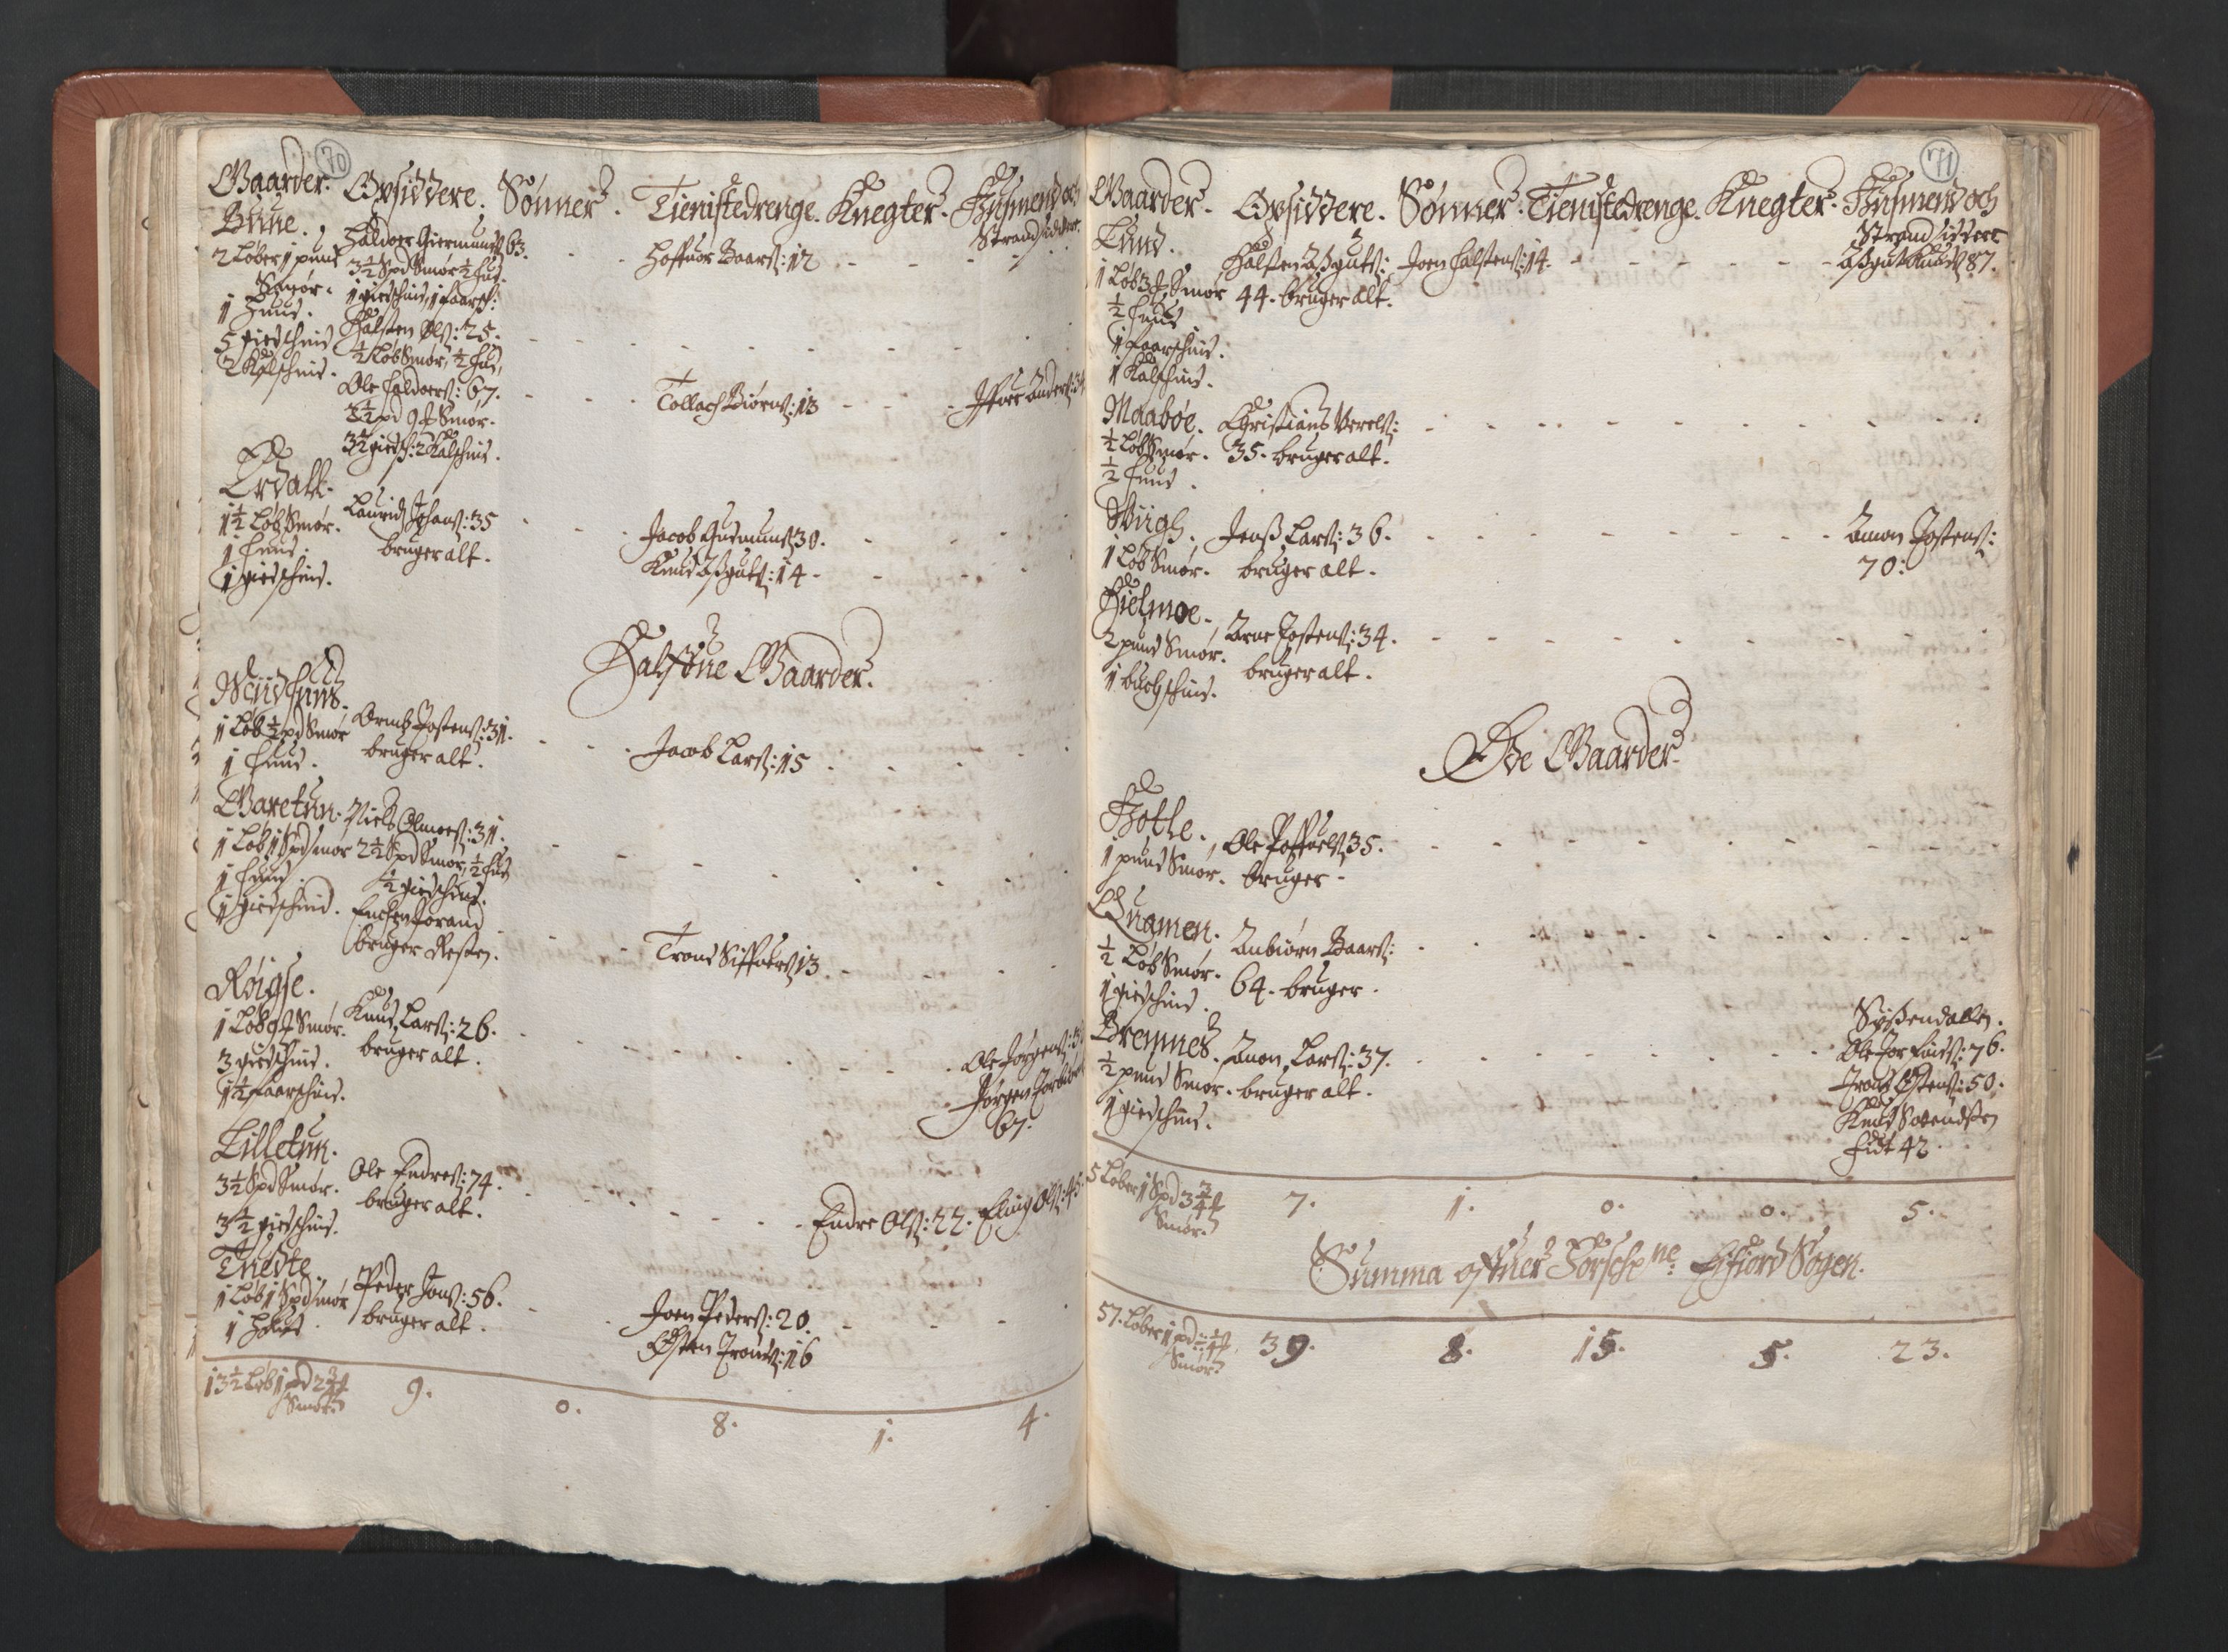 RA, Fogdenes og sorenskrivernes manntall 1664-1666, nr. 14: Hardanger len, Ytre Sogn fogderi og Indre Sogn fogderi, 1664-1665, s. 70-71